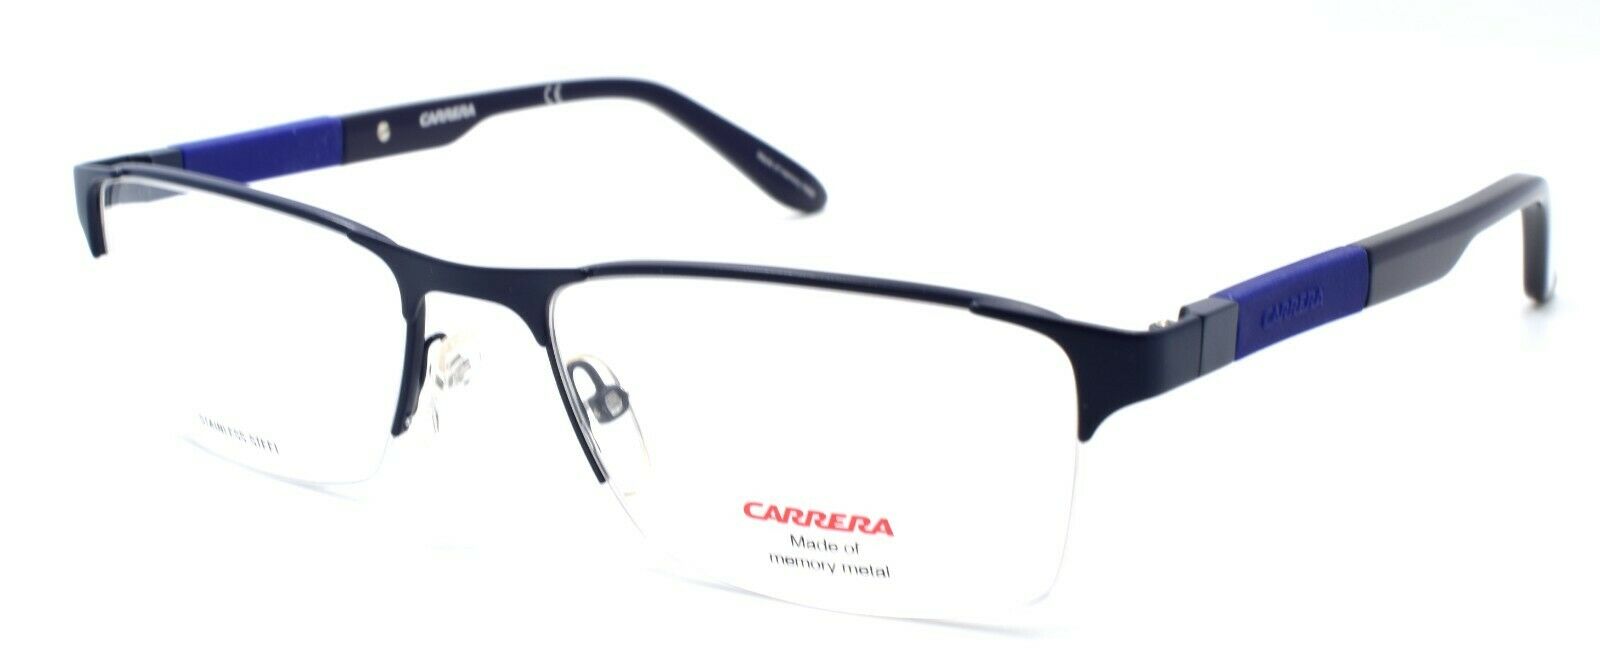 1-Carrera CA8821 PYF Men's Eyeglasses Frames Half-rim 53-18-140 Matte Blue-762753740397-IKSpecs